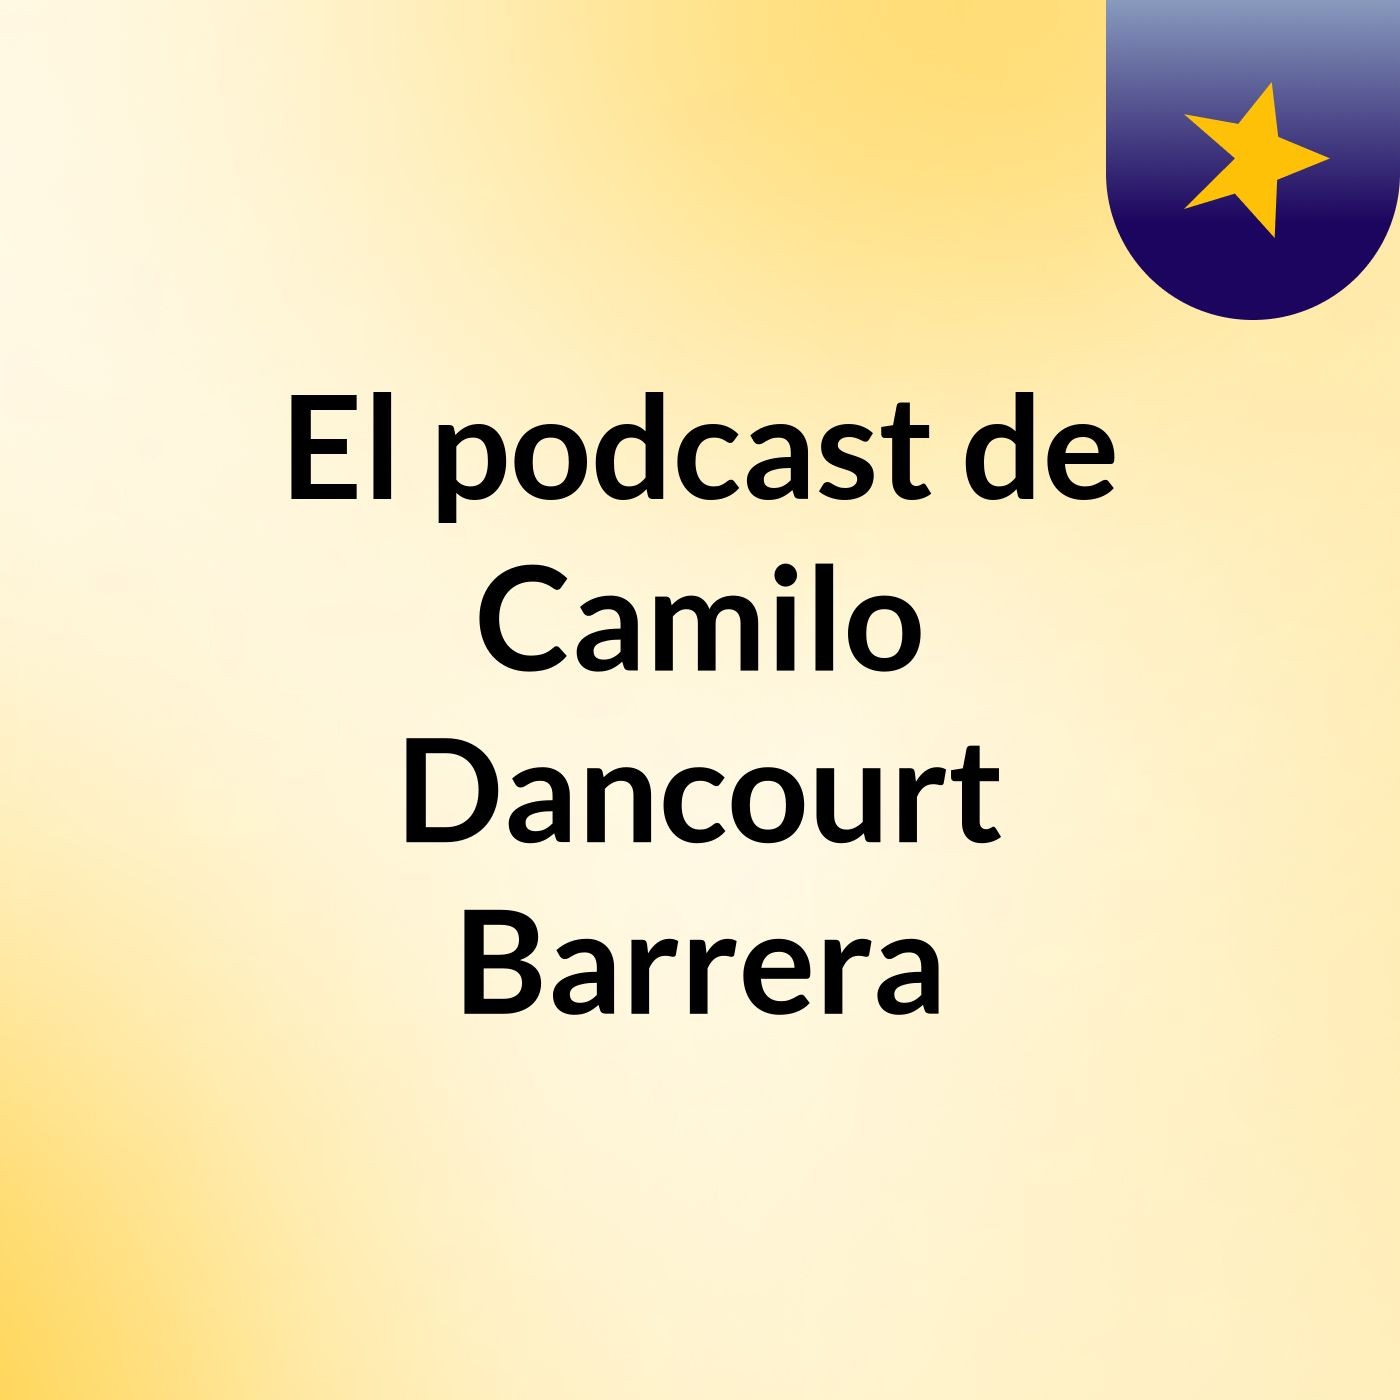 El podcast de Camilo Dancourt Barrera